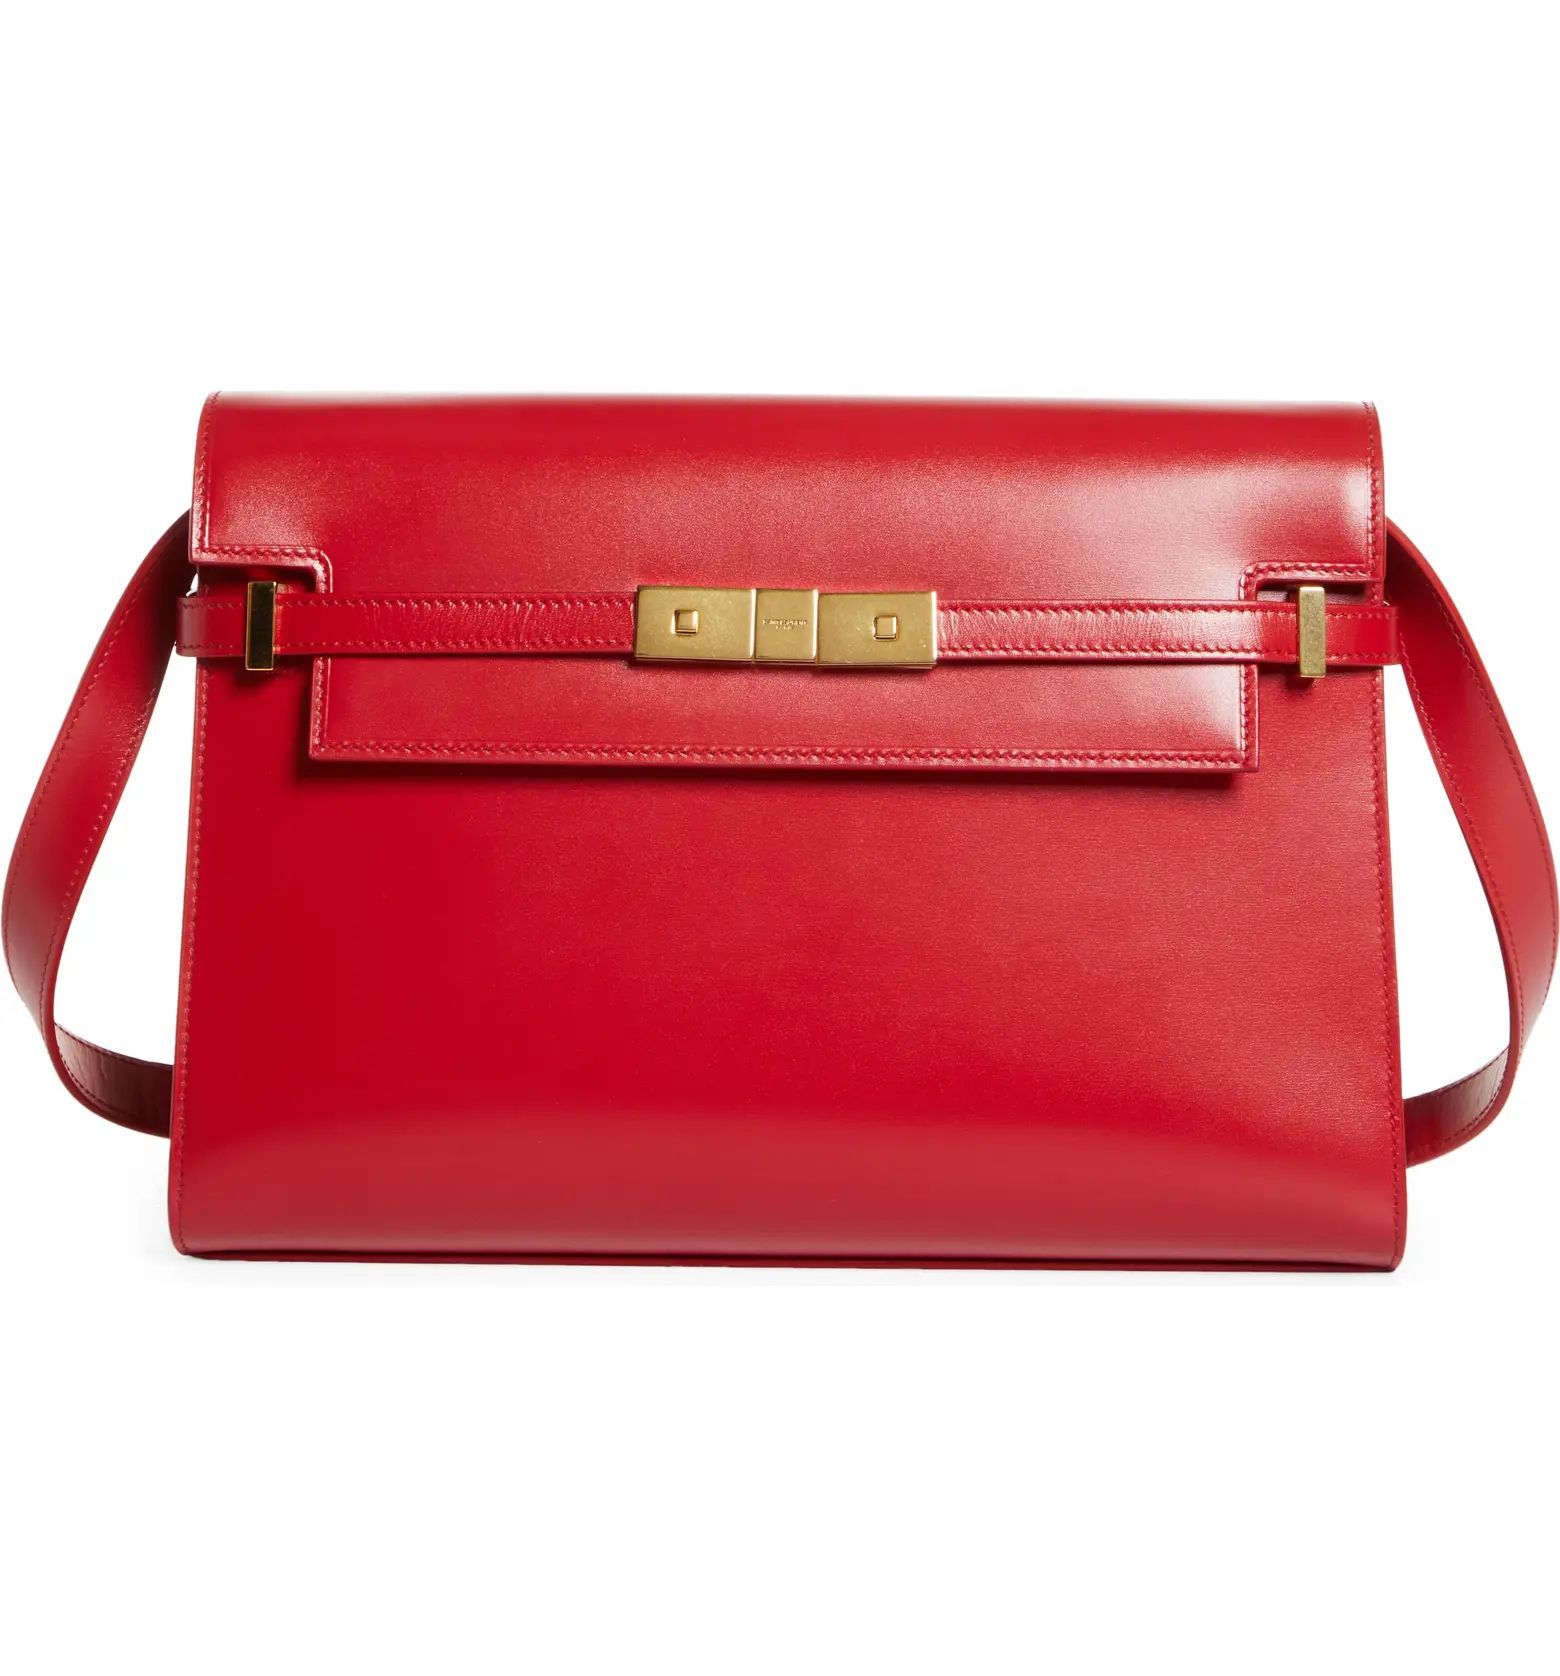 Where to Resell Designer Handbags Online